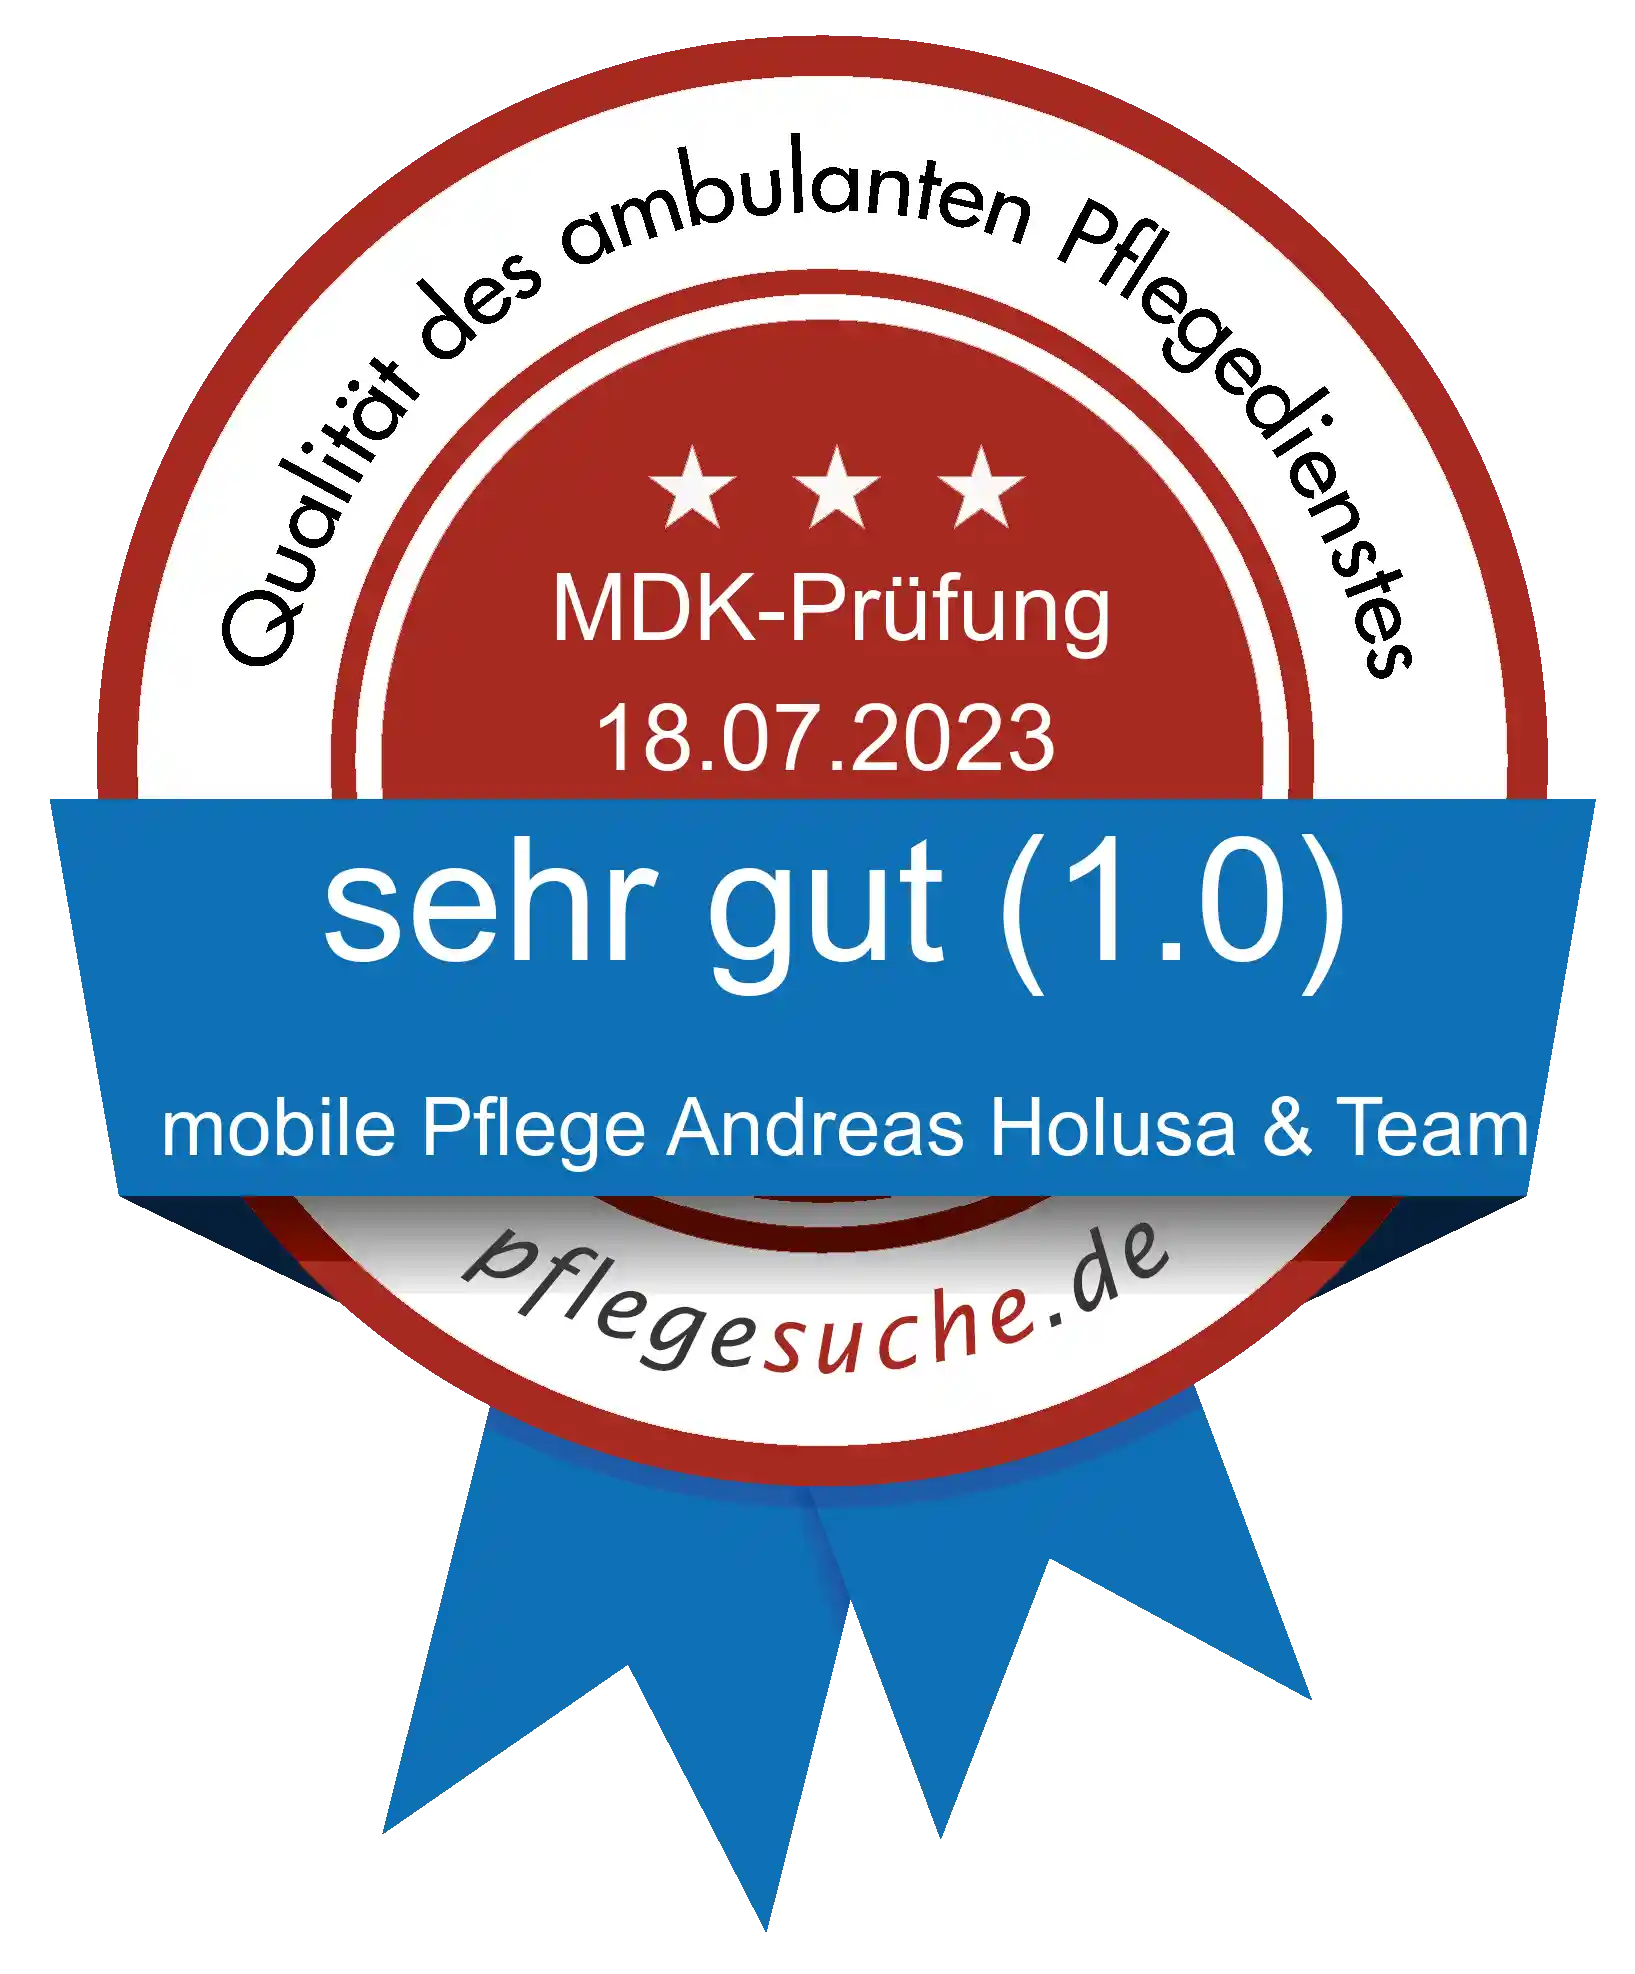 Siegel Benotung: mobile Pflege Andreas Holusa & Team